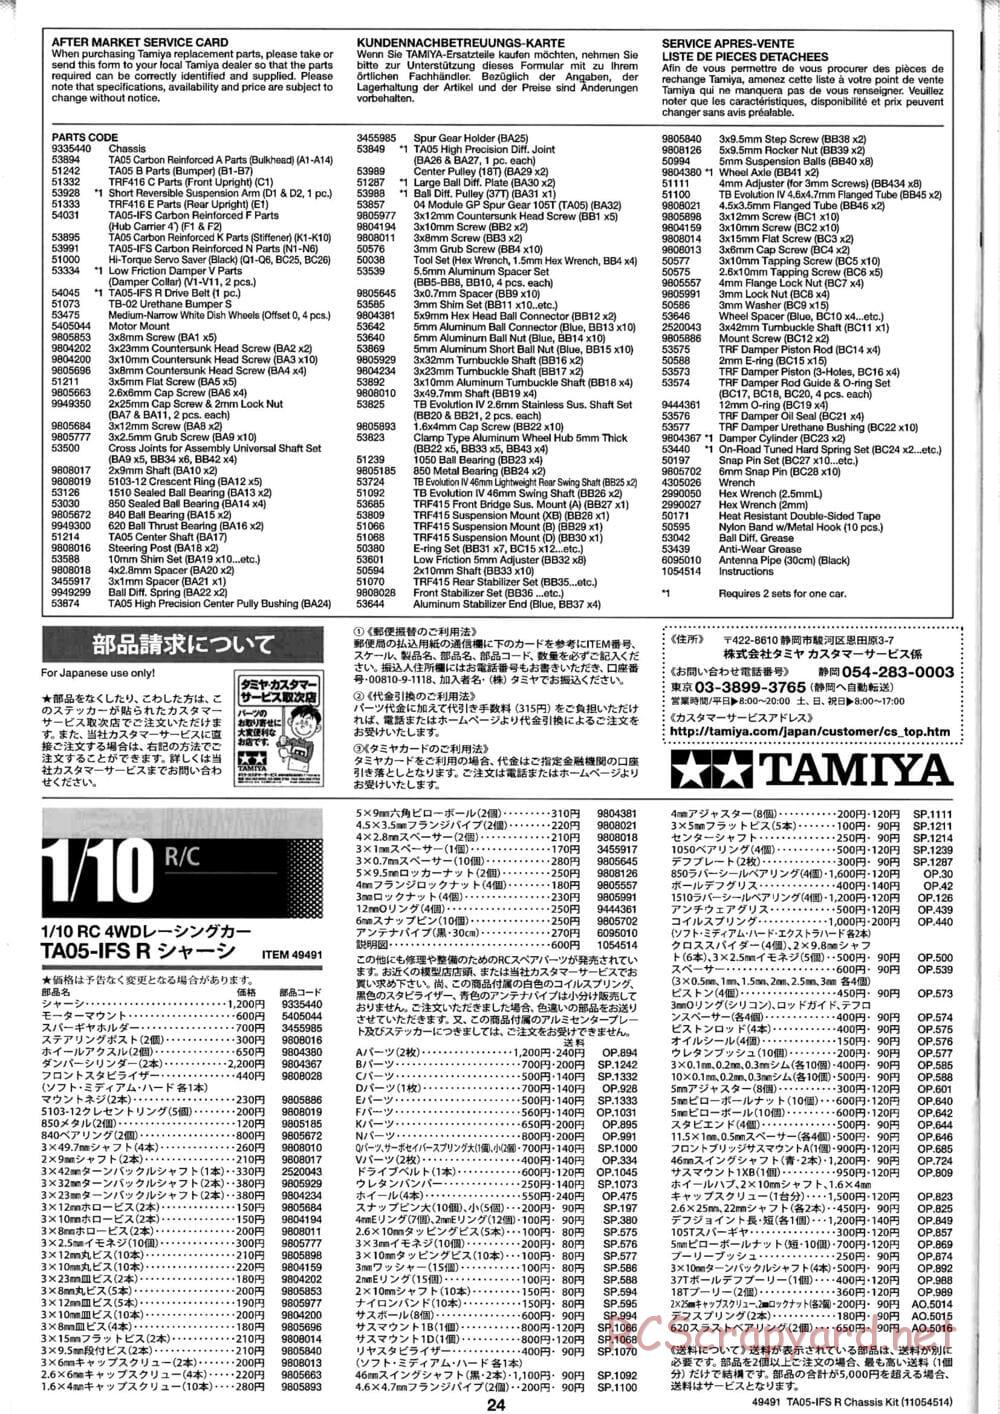 Tamiya - TA05-IFS R Chassis - Manual - Page 24